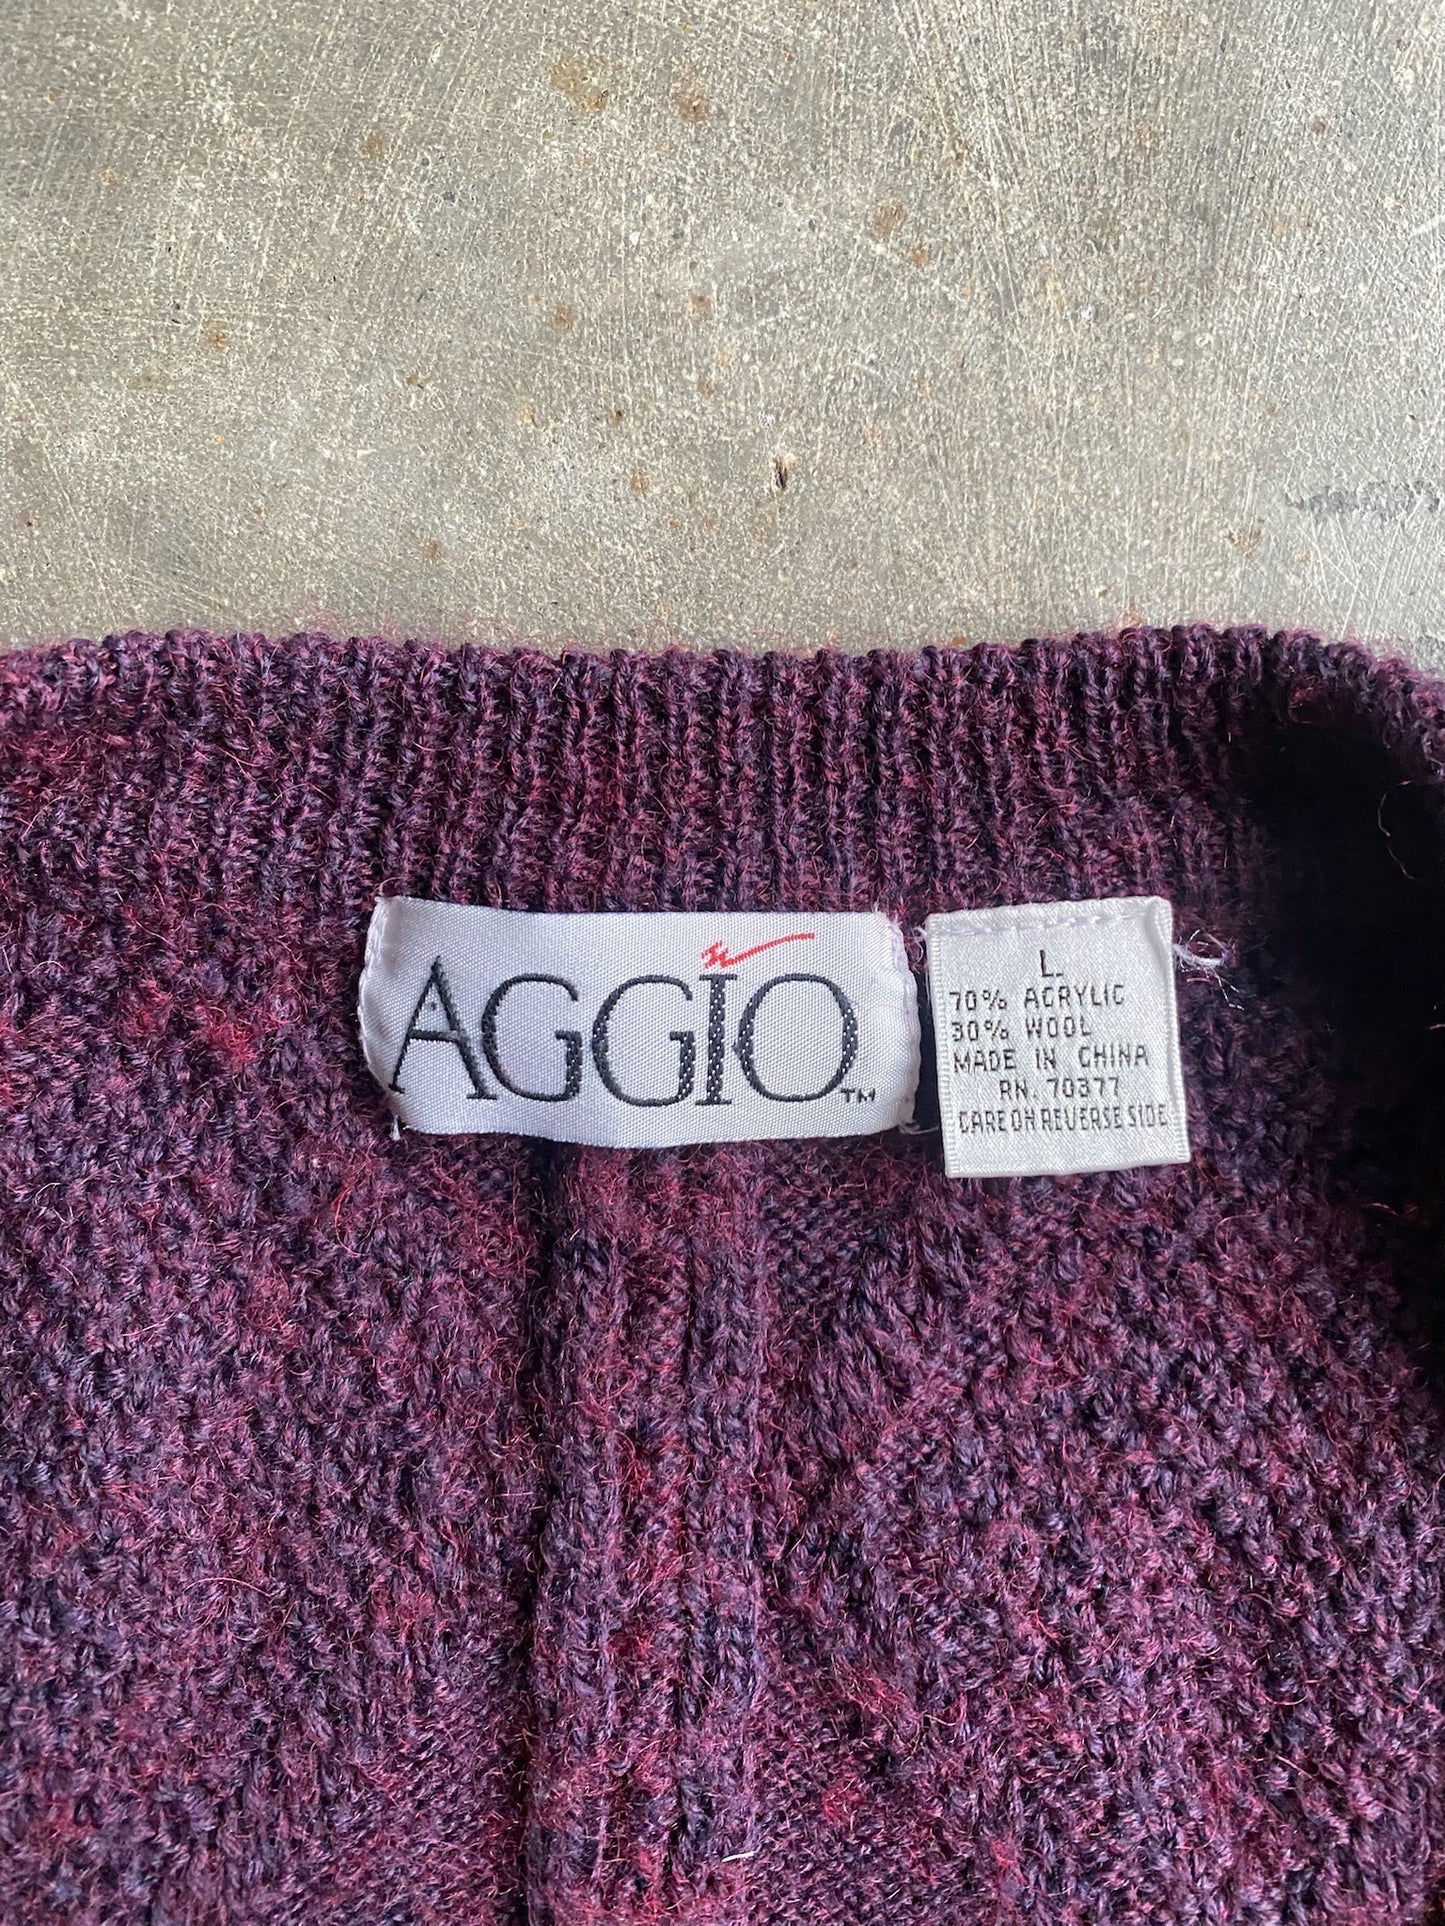 Vintage Aggio Cardigan - L